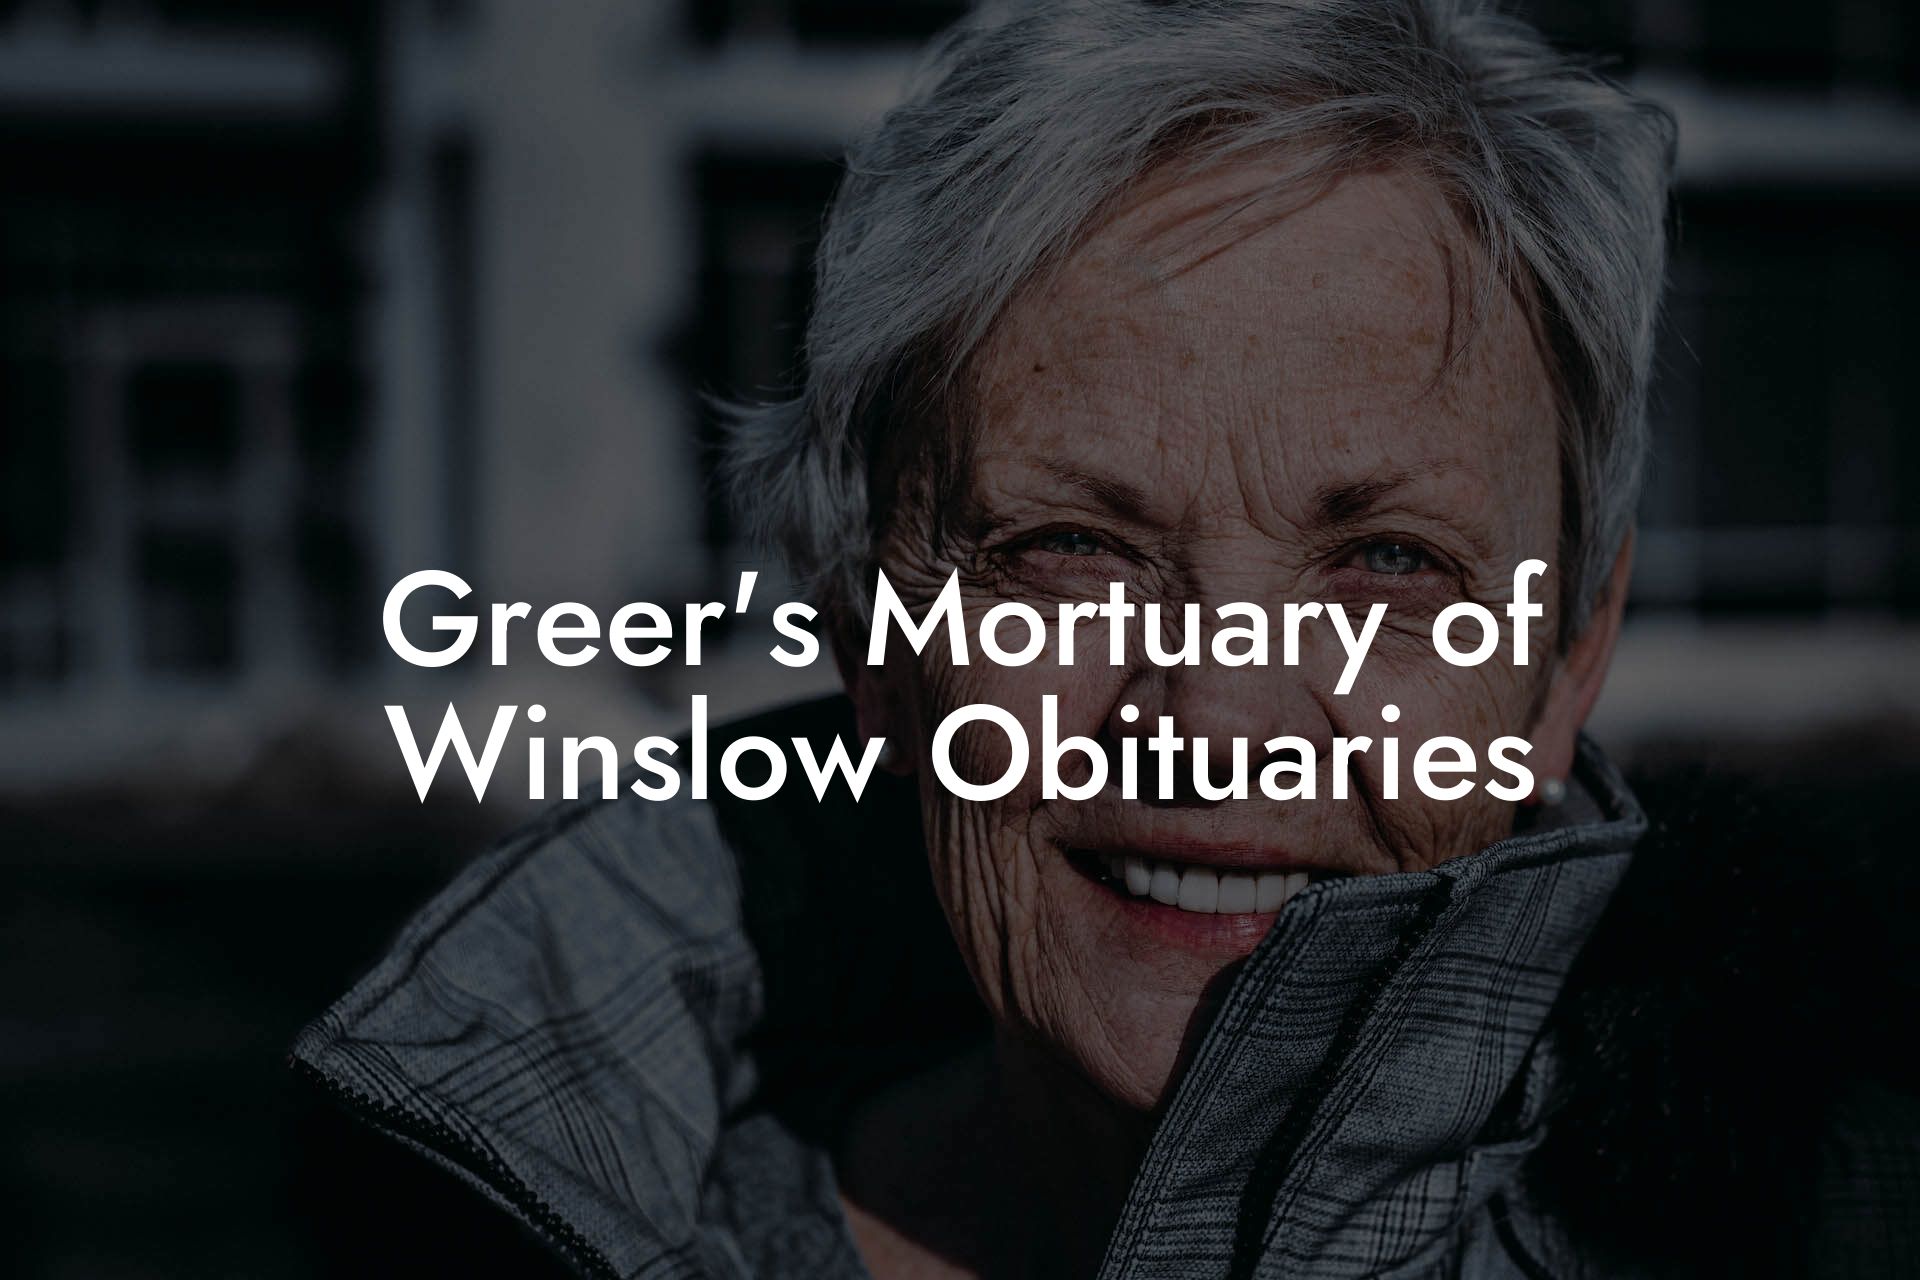 Greer's Mortuary of Winslow Obituaries